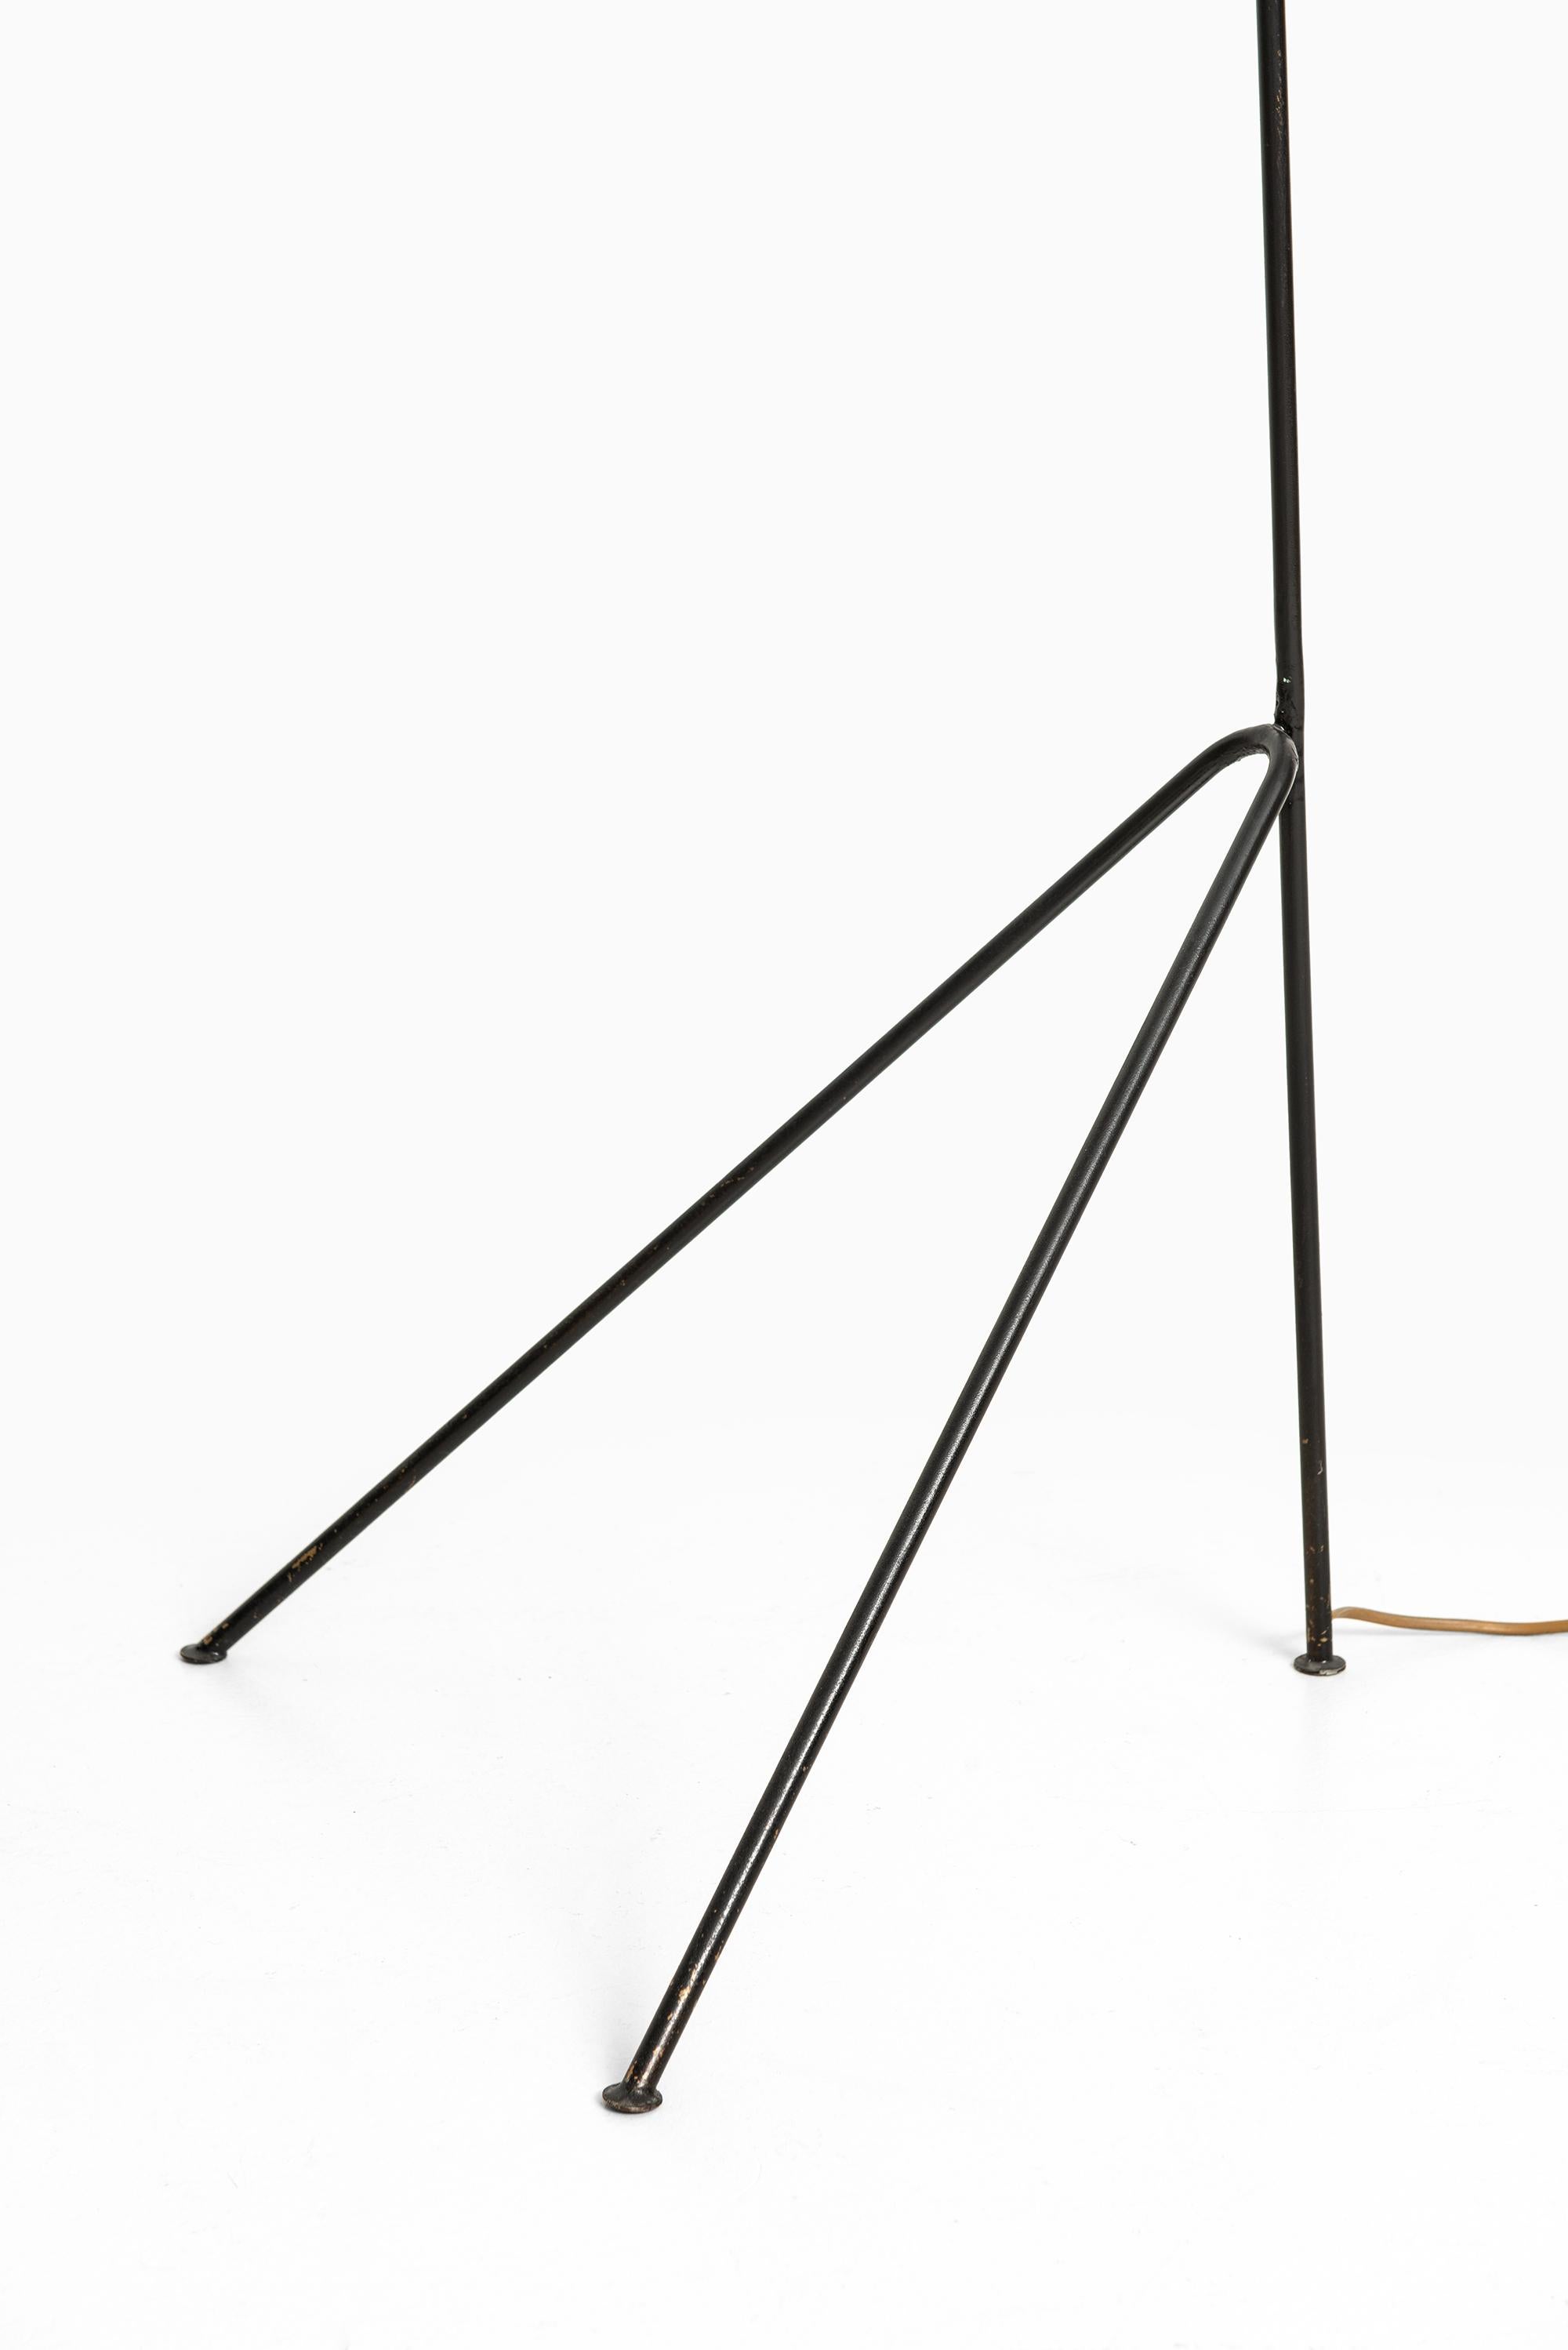 Scandinavian Modern Floor Lamp in the Manner of Greta Magnusson-Grossman Produced in Sweden For Sale